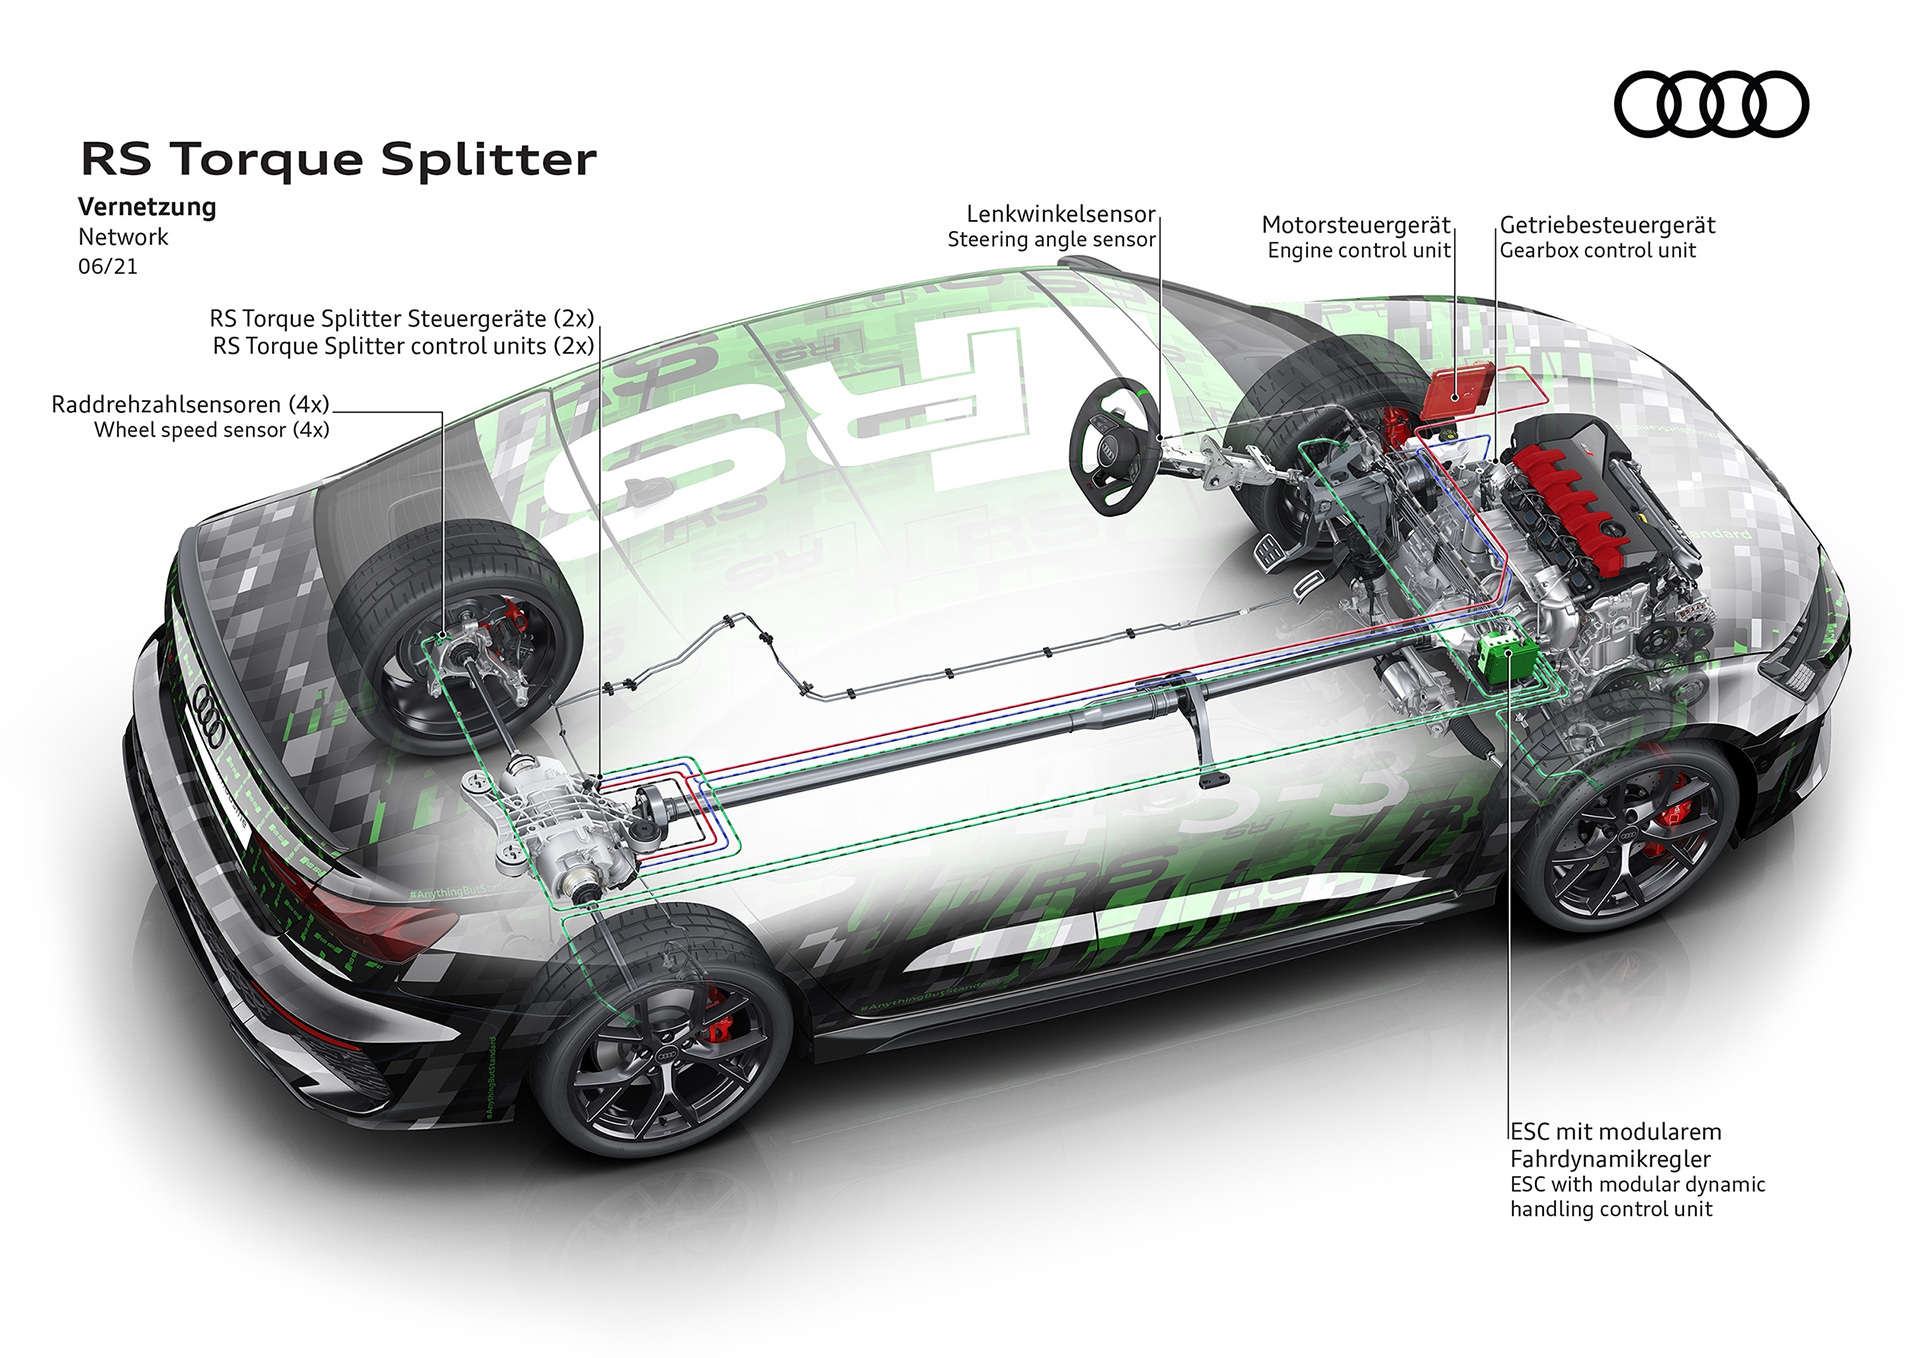 NEO AUDI RS 3 TORQUE SPLITTER 13 Πώς λειτουργεί το RS Torque Splitter του νέου Audi RS 3